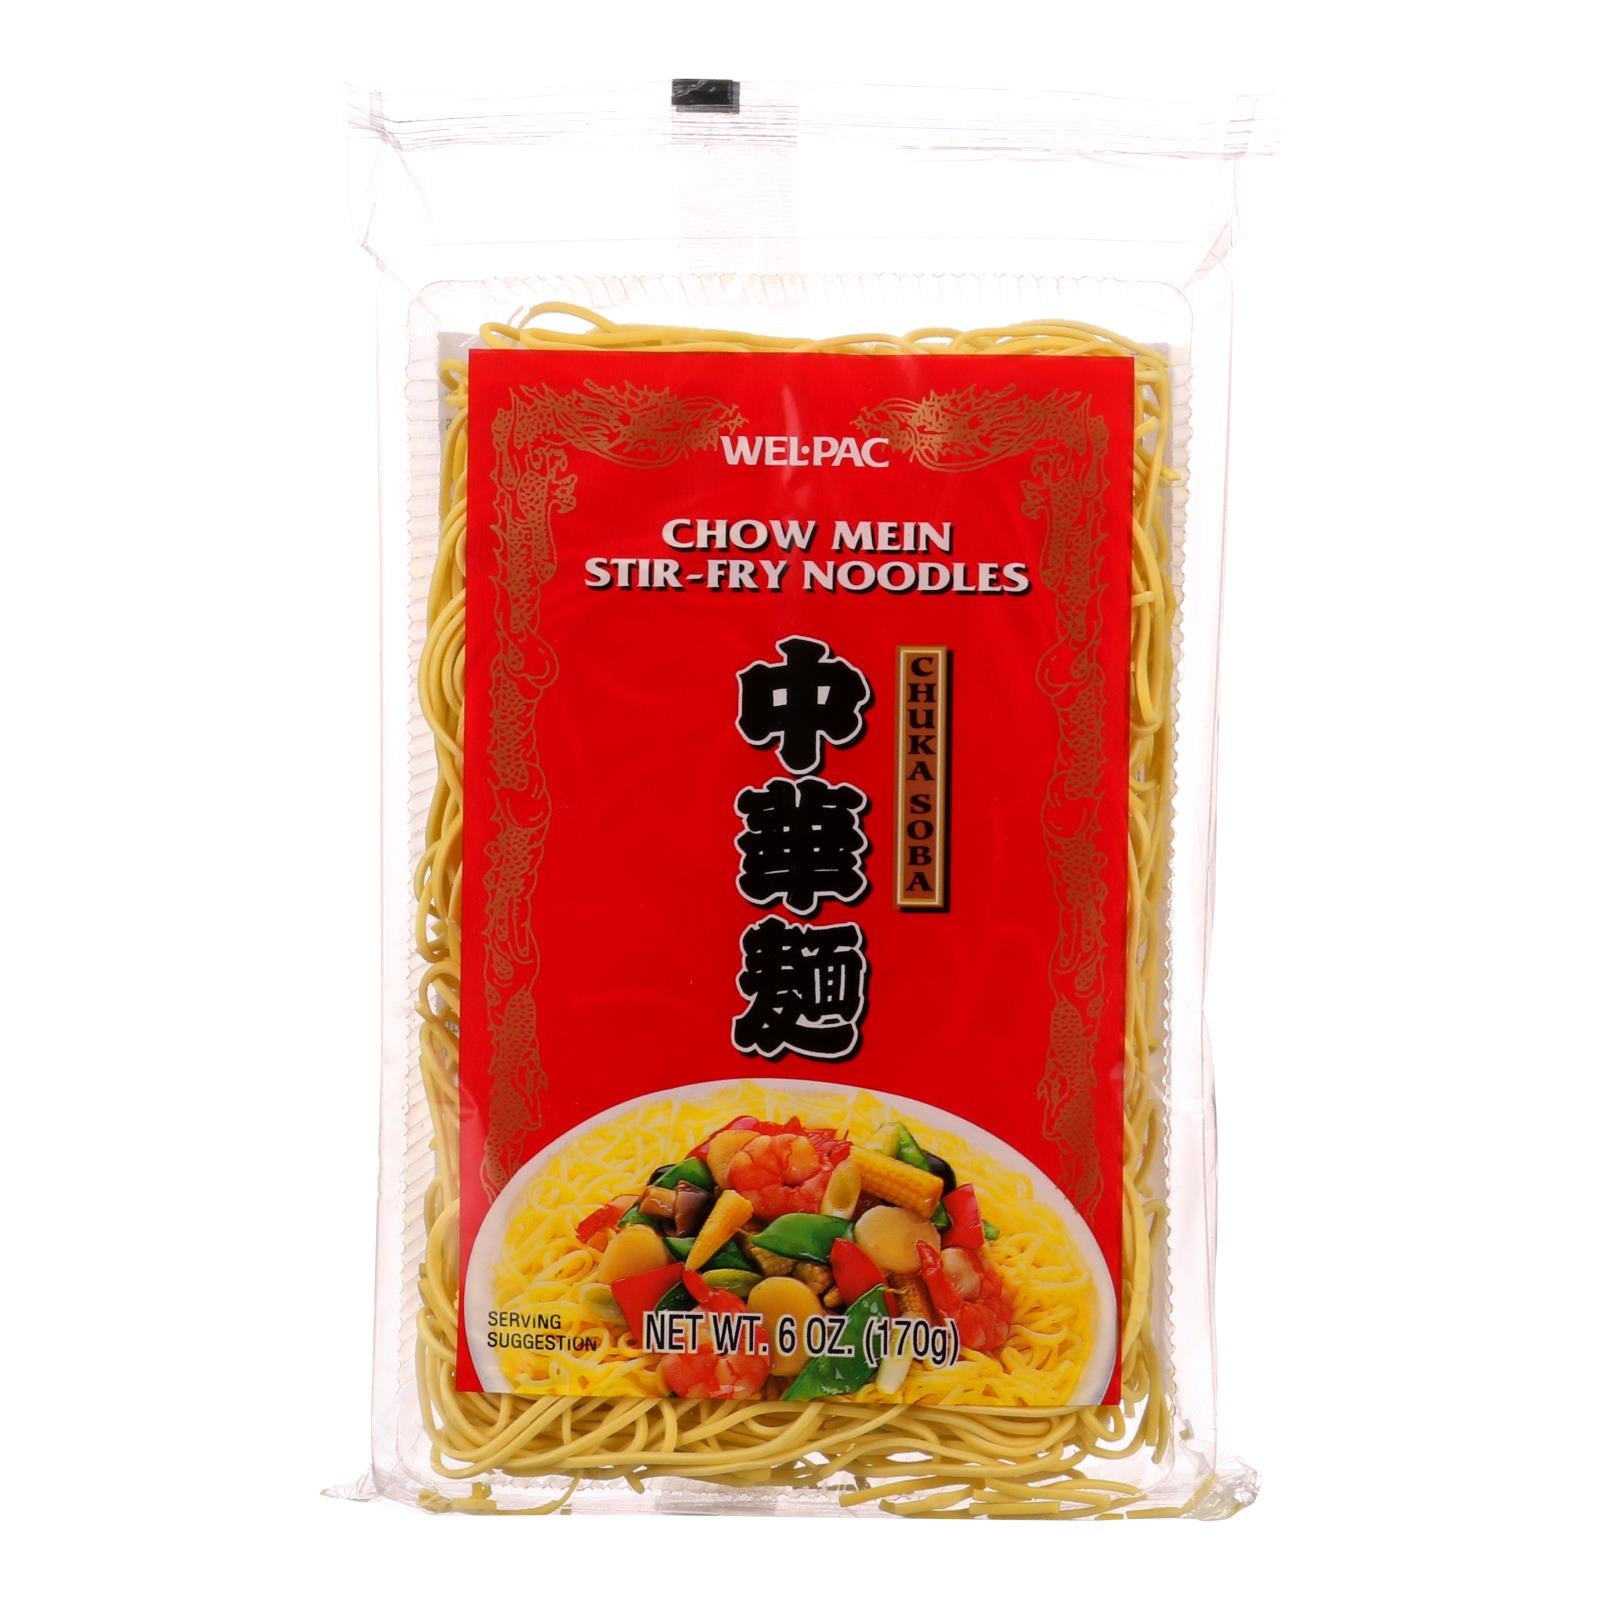 Wel-pac Chow Mein Stir-fry Noodles  - Case Of 12 - 6 Oz